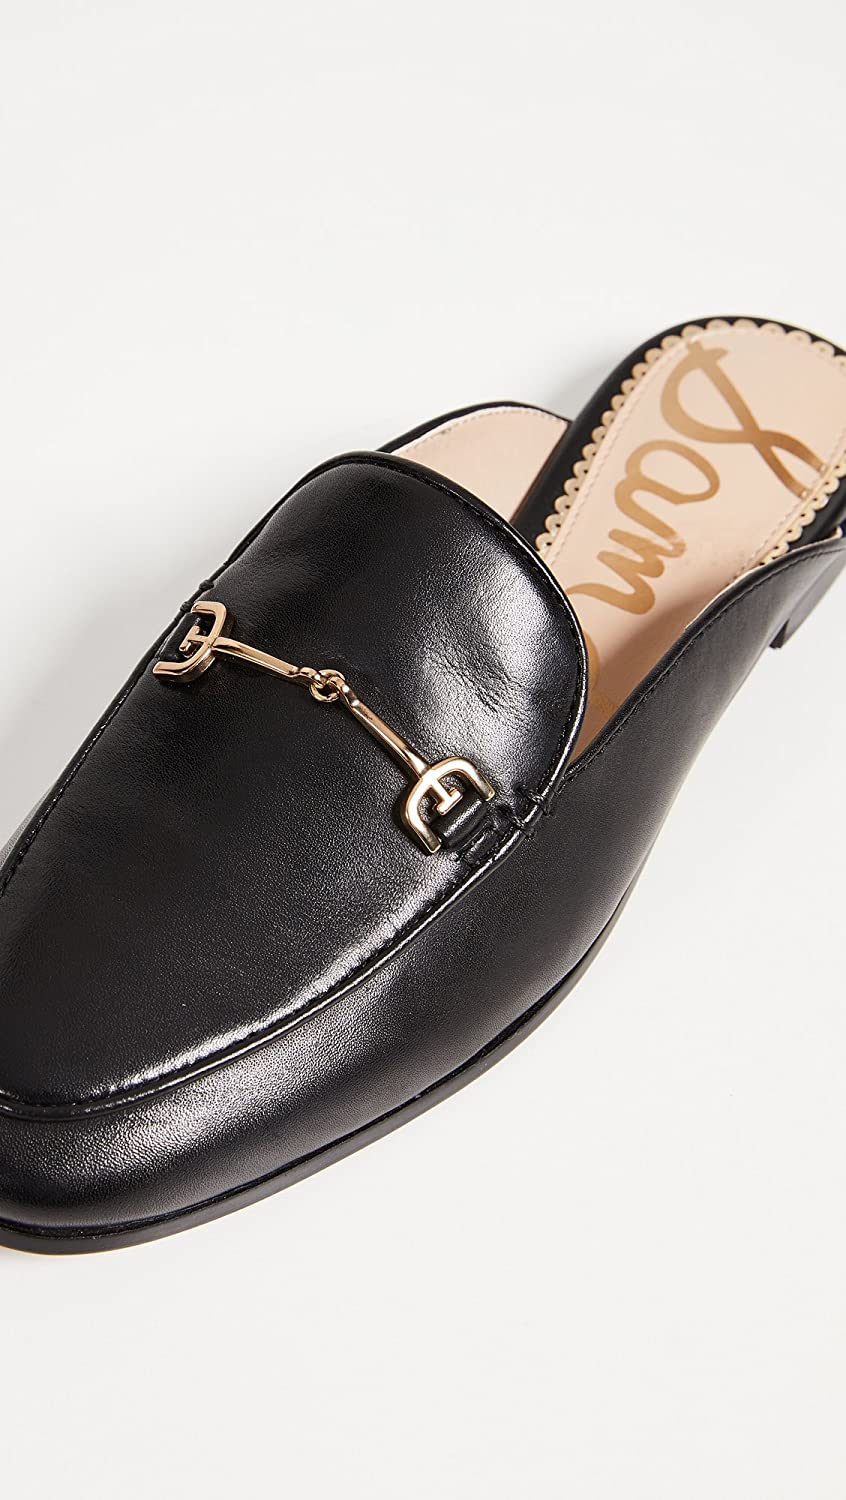 Sam Edelman Women's Shoes Linnie Leather Closed Toe Mules, Black, Size